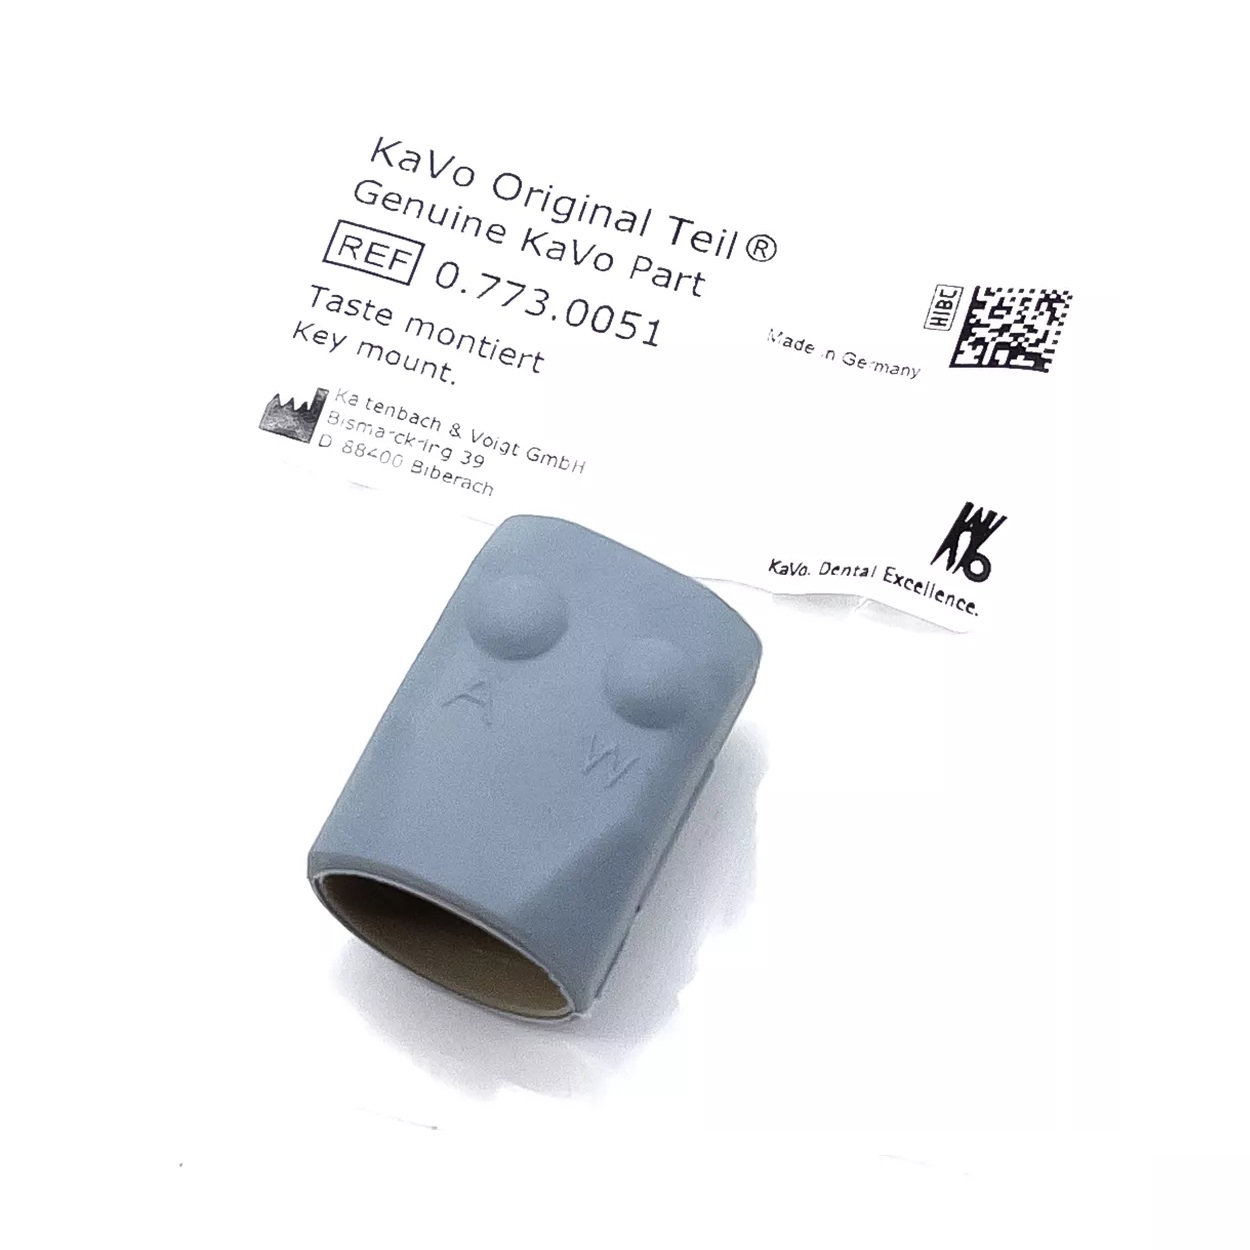 KEY - резиновая кнопка пустера KaVo 0.773.0051